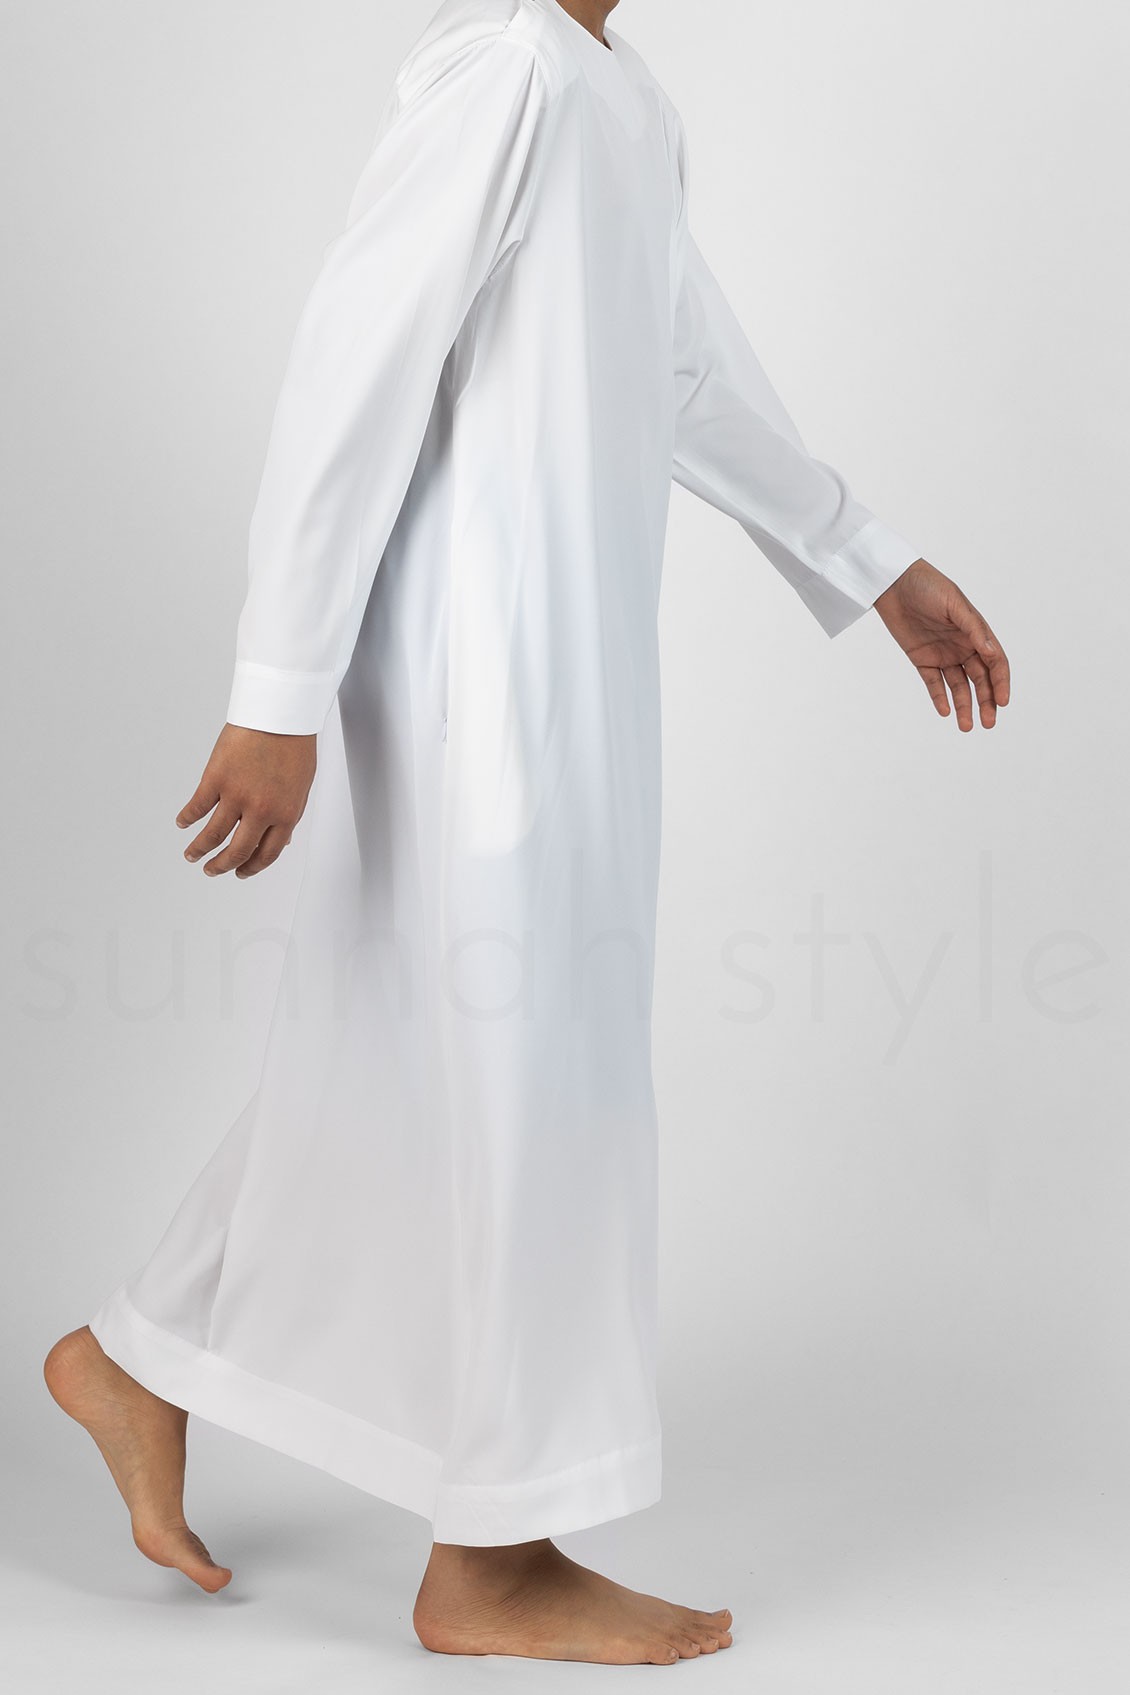 Sunnah Style Boys Kids Child Teen Shoulder Snap Thobe Creamy White